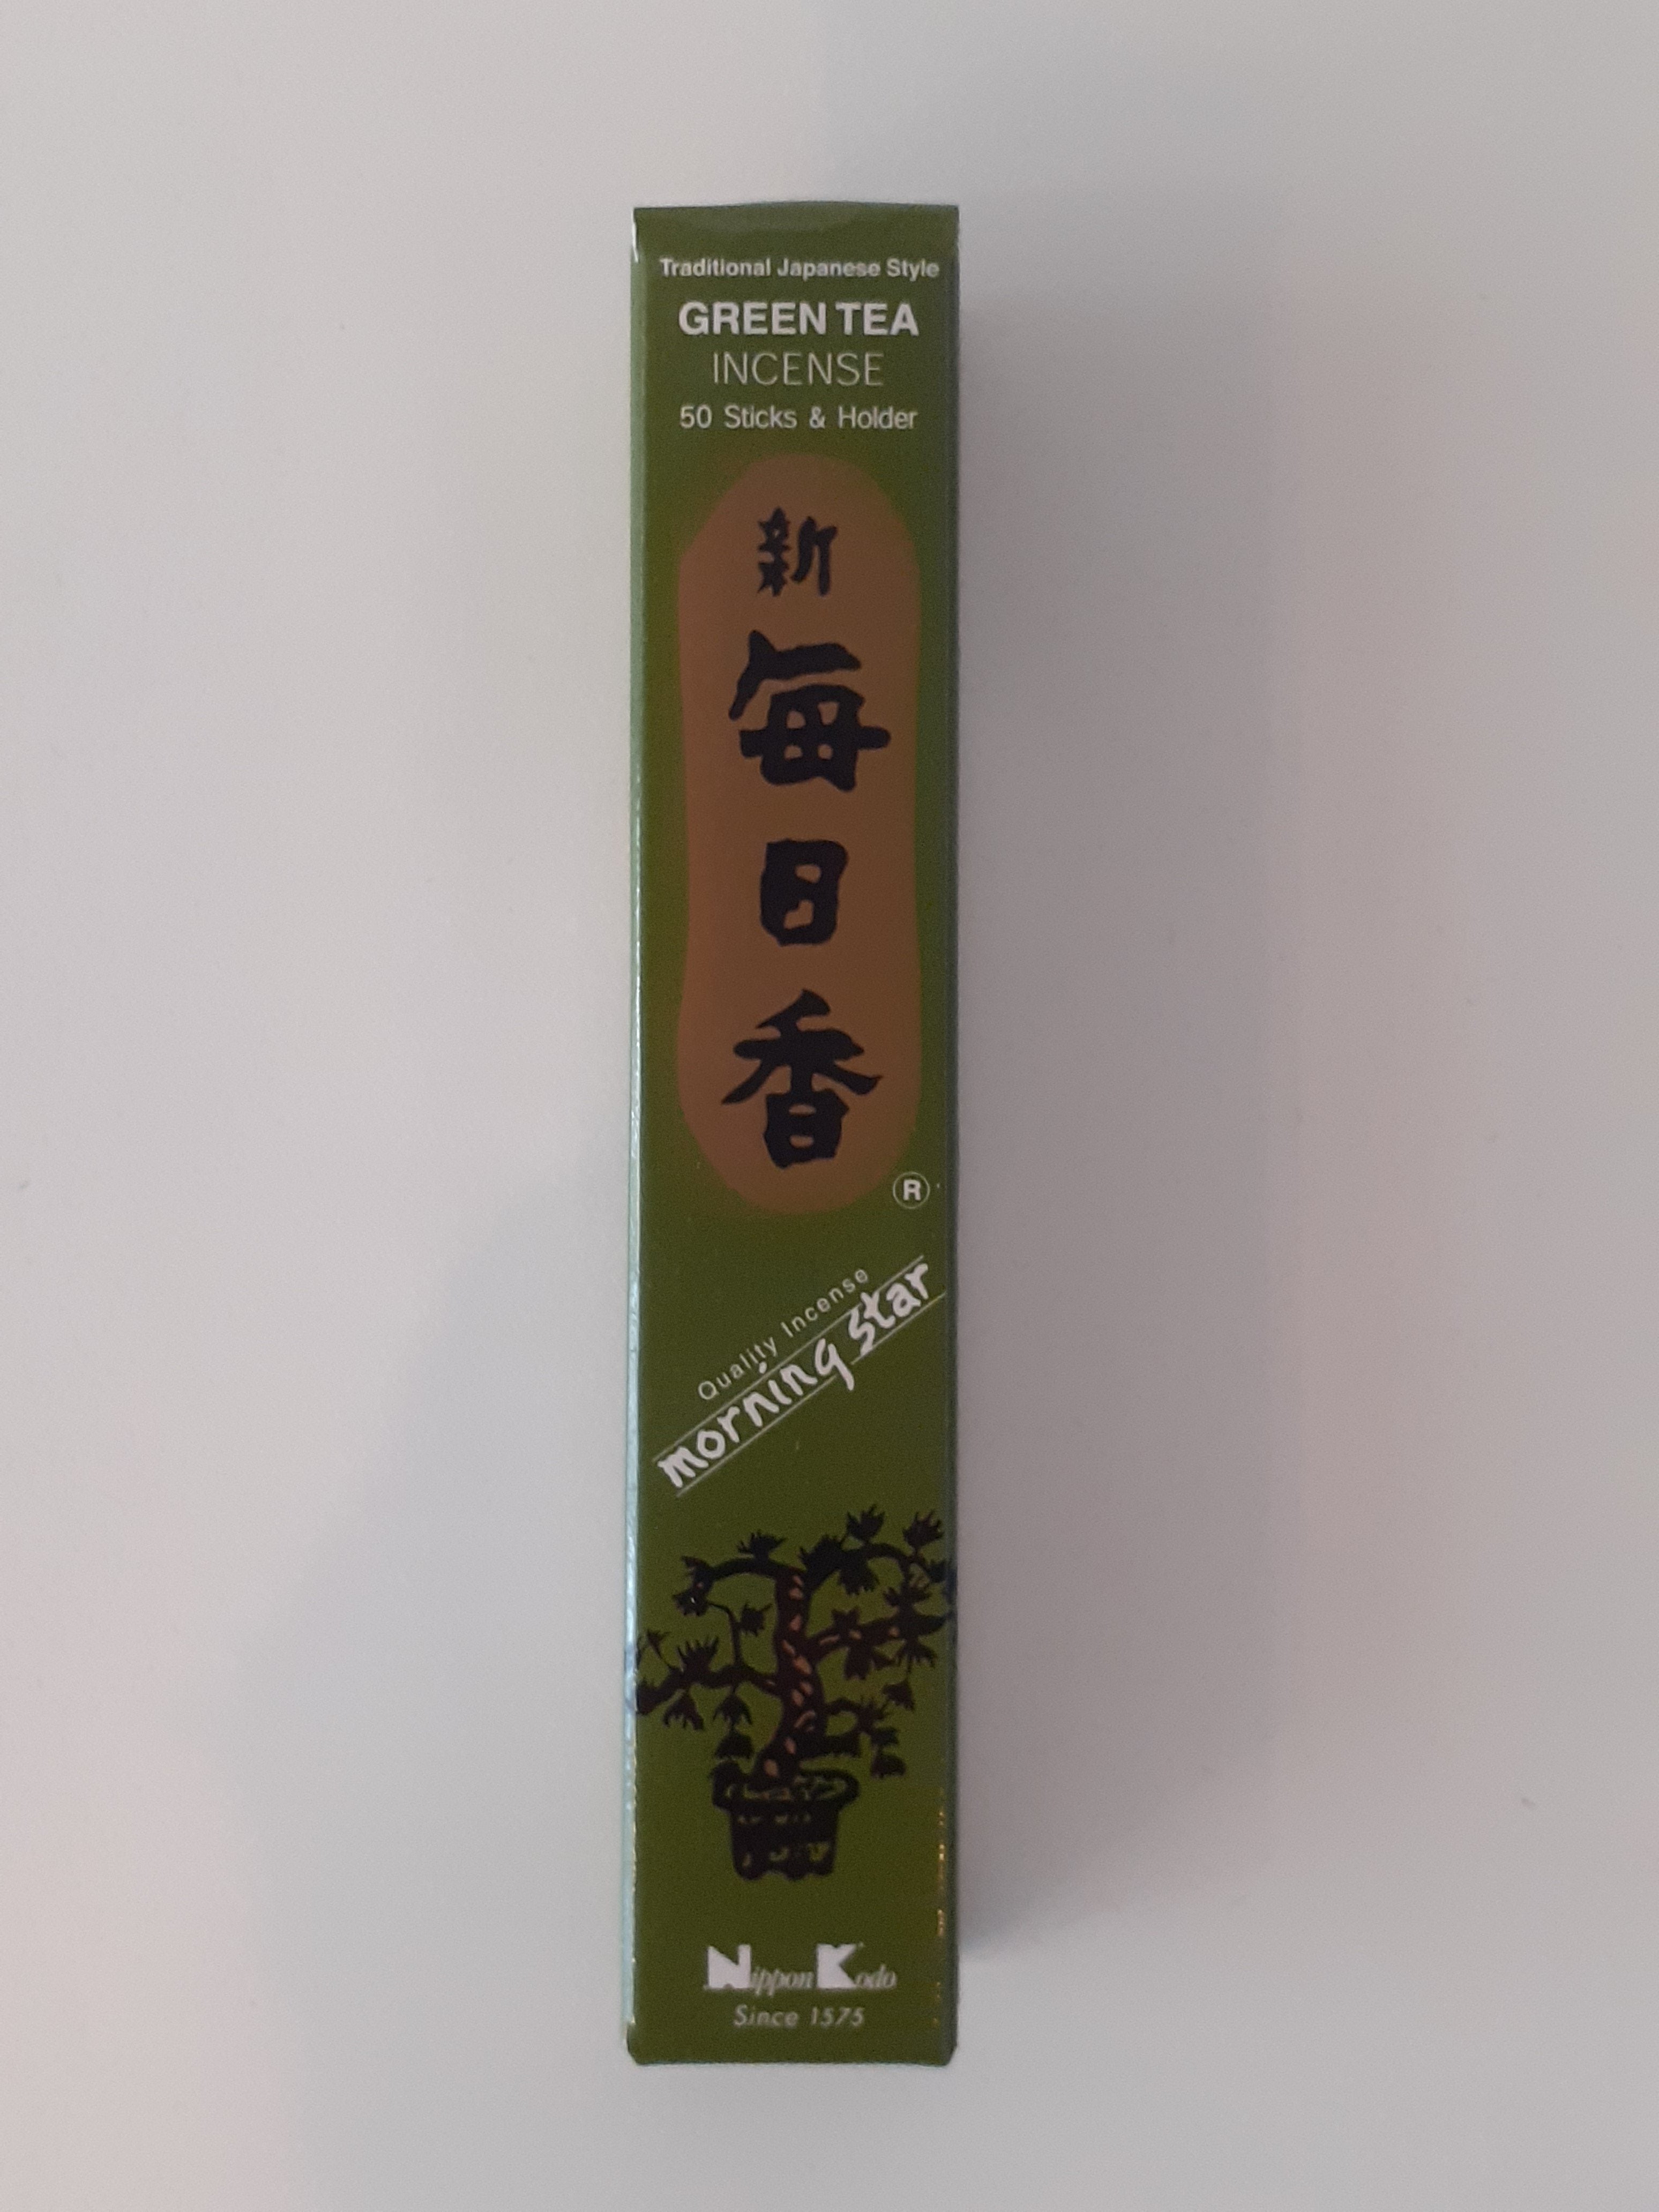 Incenso Morning Star "Green Tea"